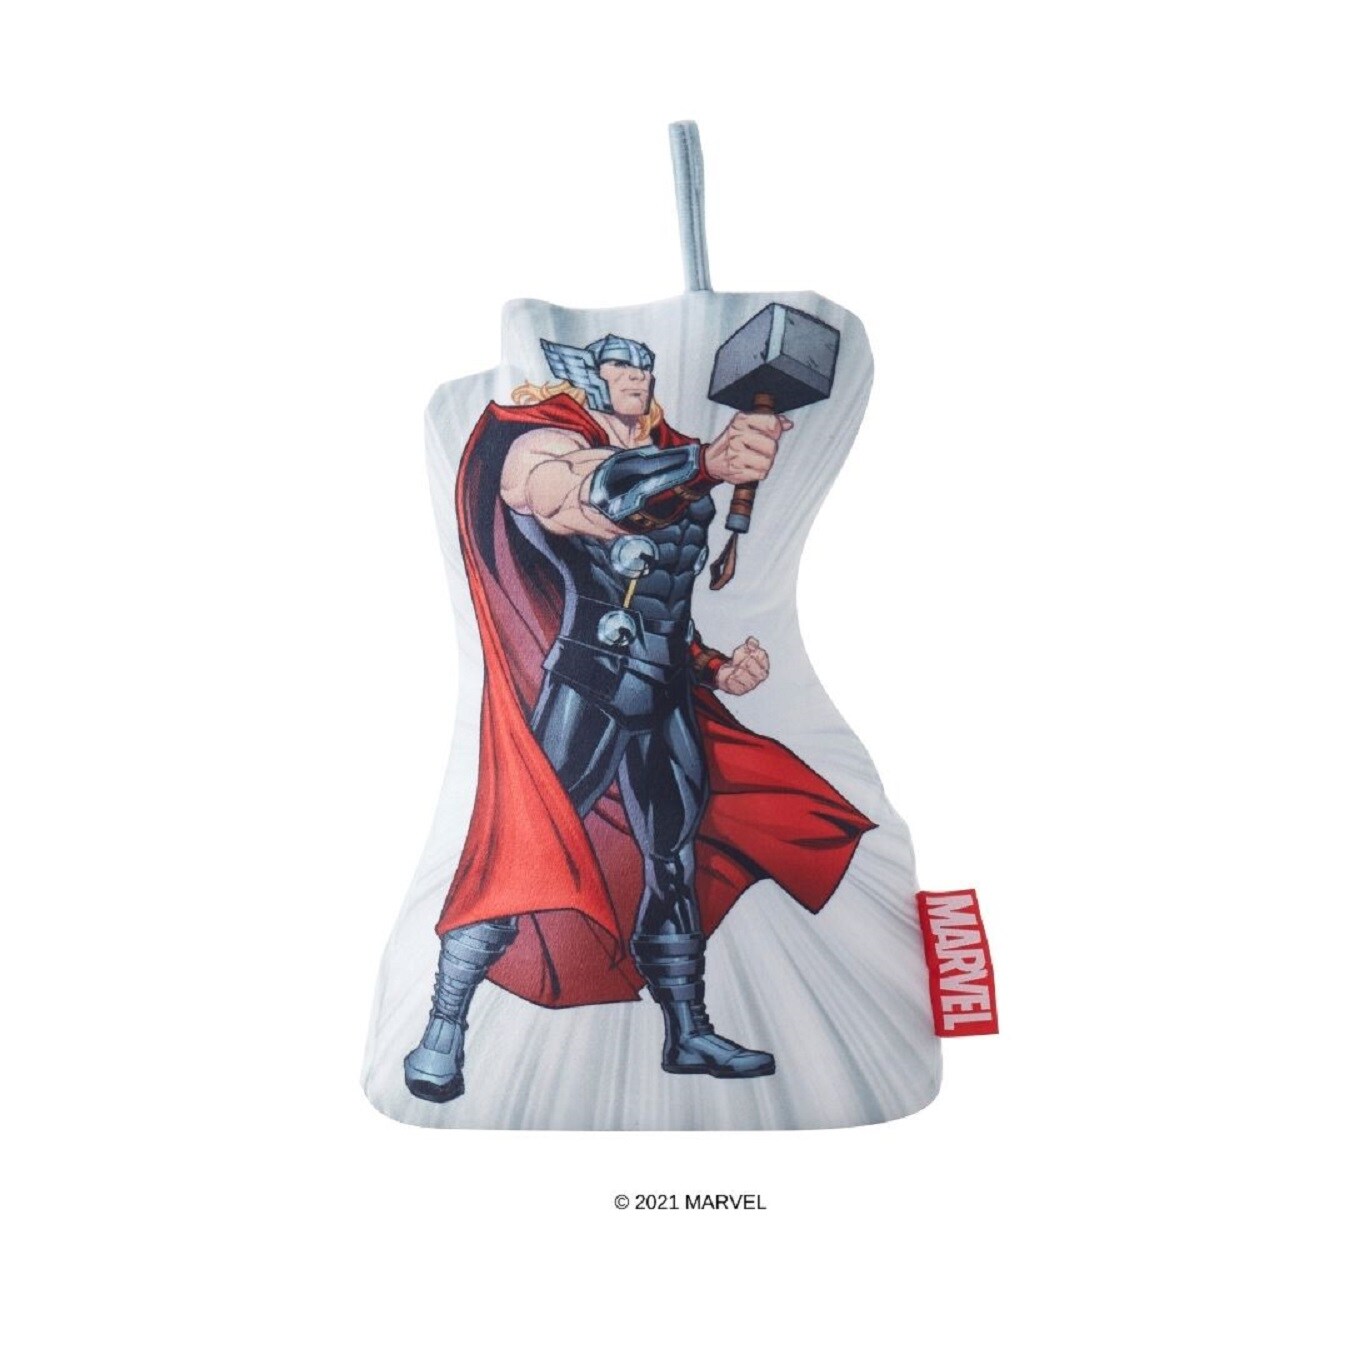 Thor pose